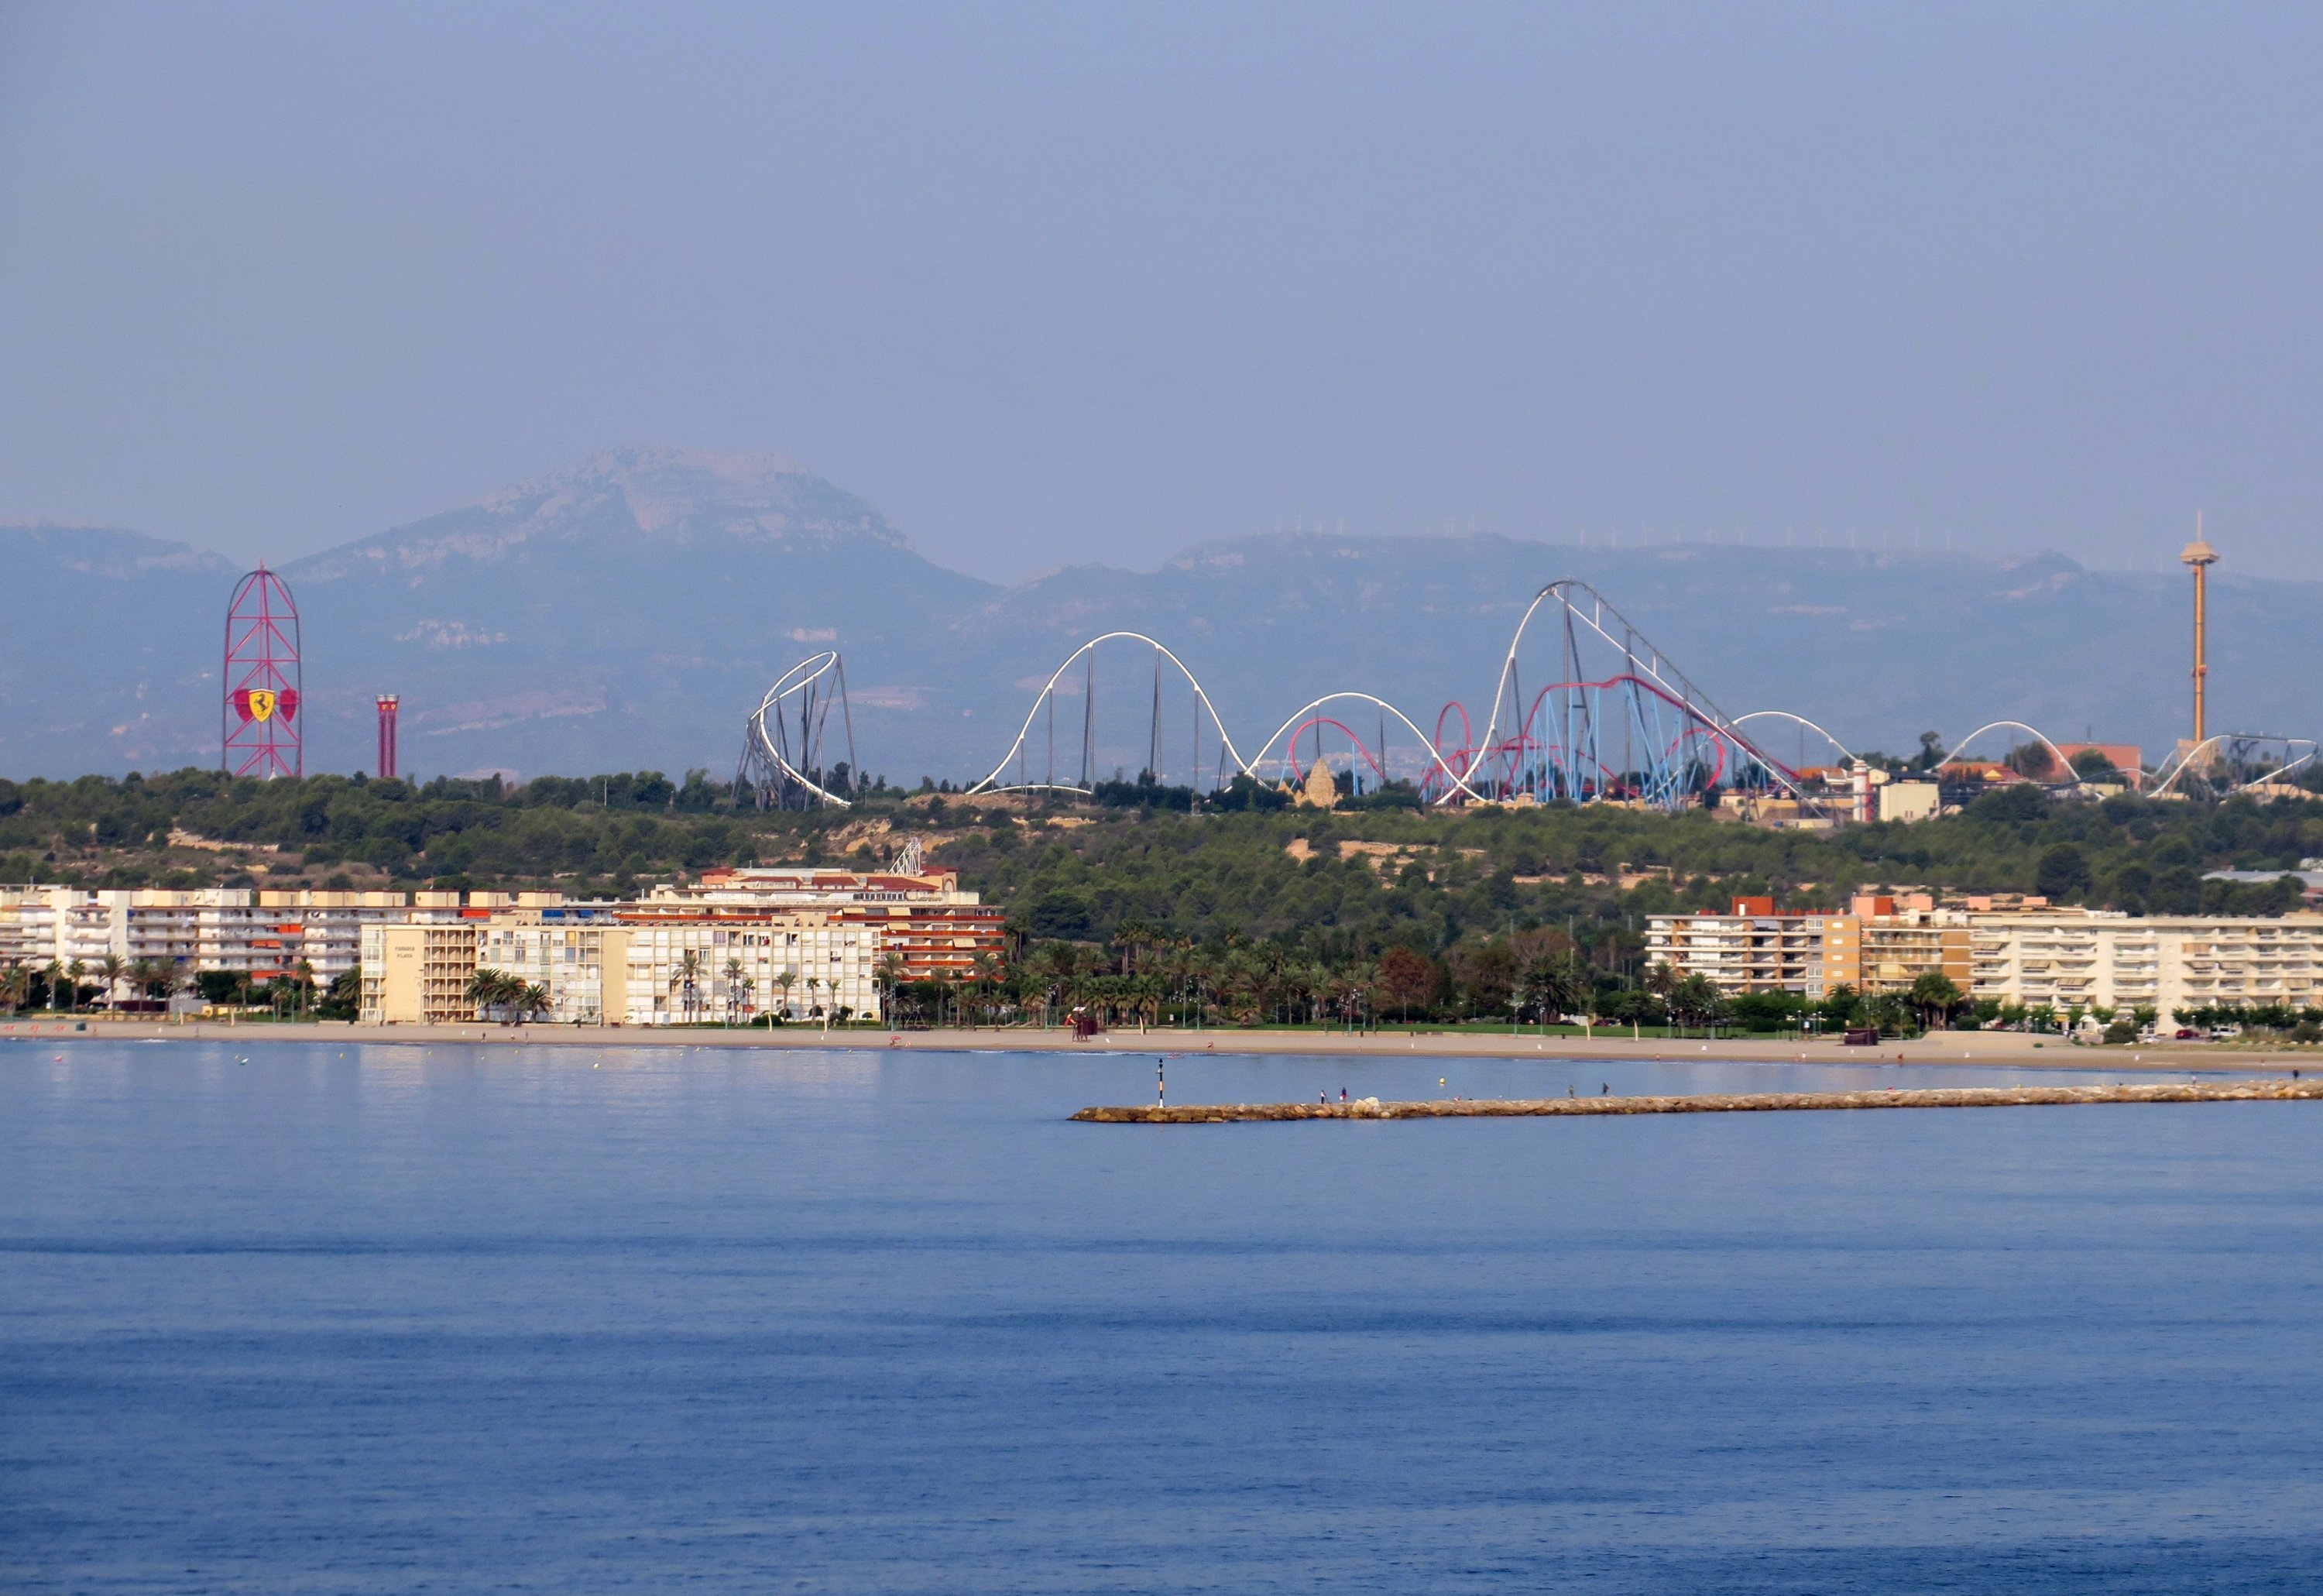  The Port Aventura and Ferrari Land theme parks at Costa Dorada are one of the main draws. (dpa Photo) 